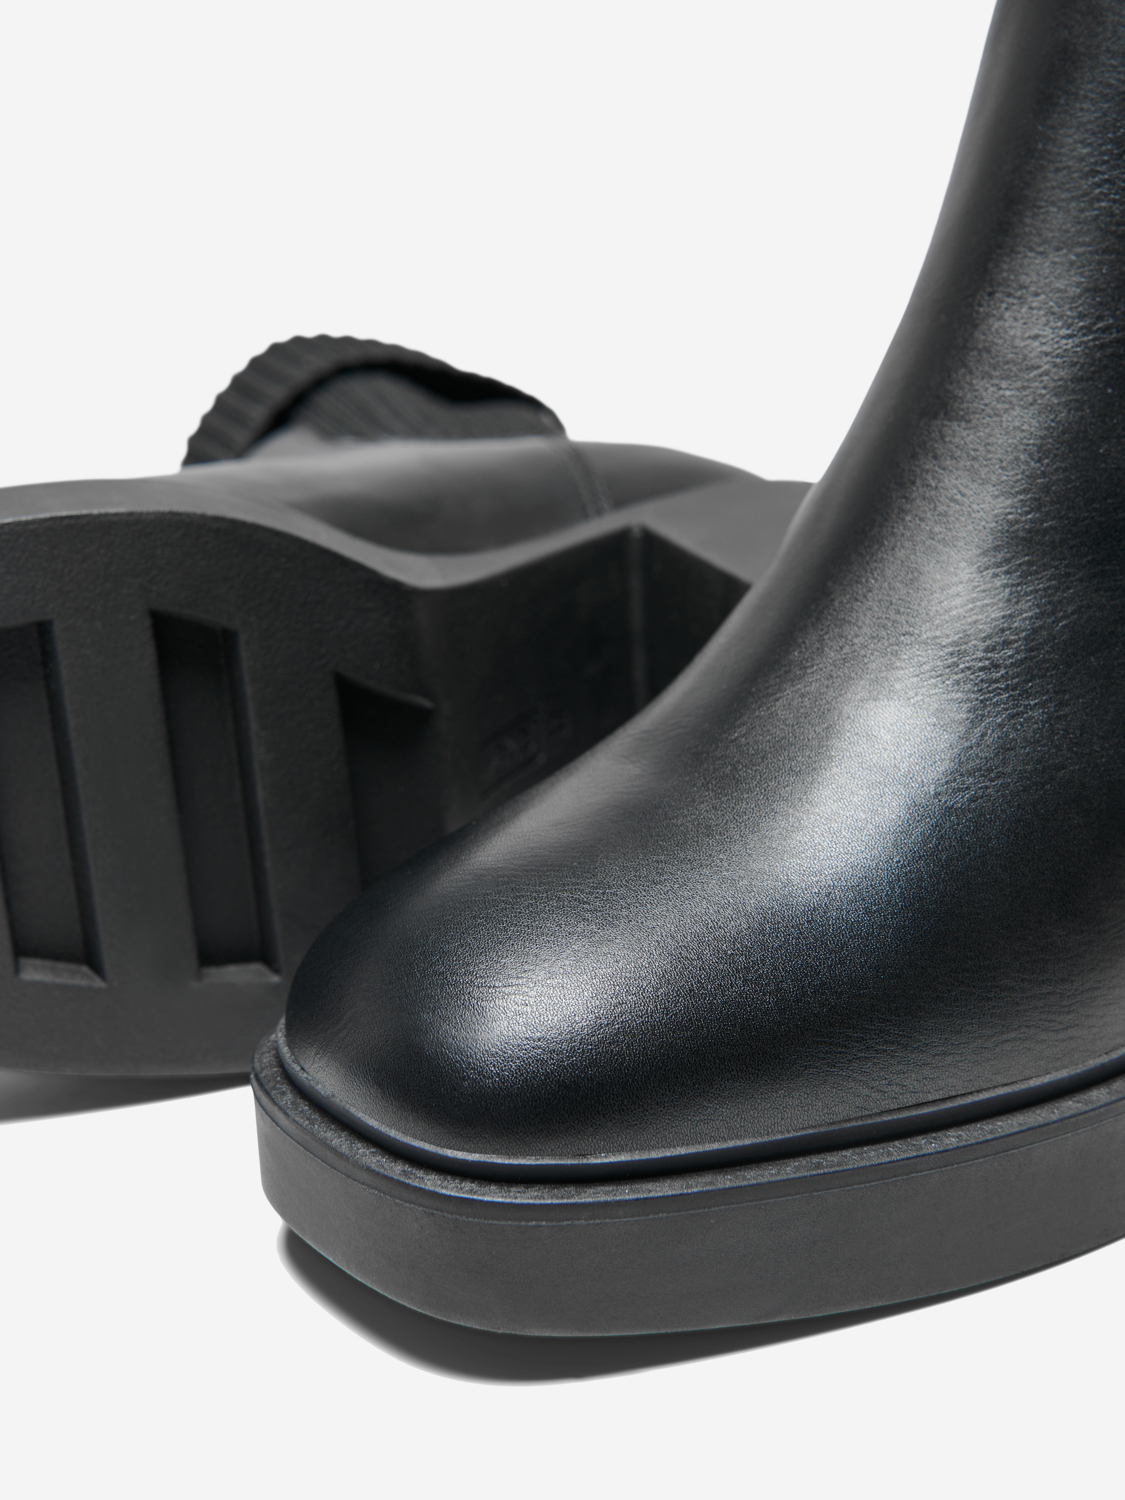 Bianca block heel faux leather boots, BLACK, large